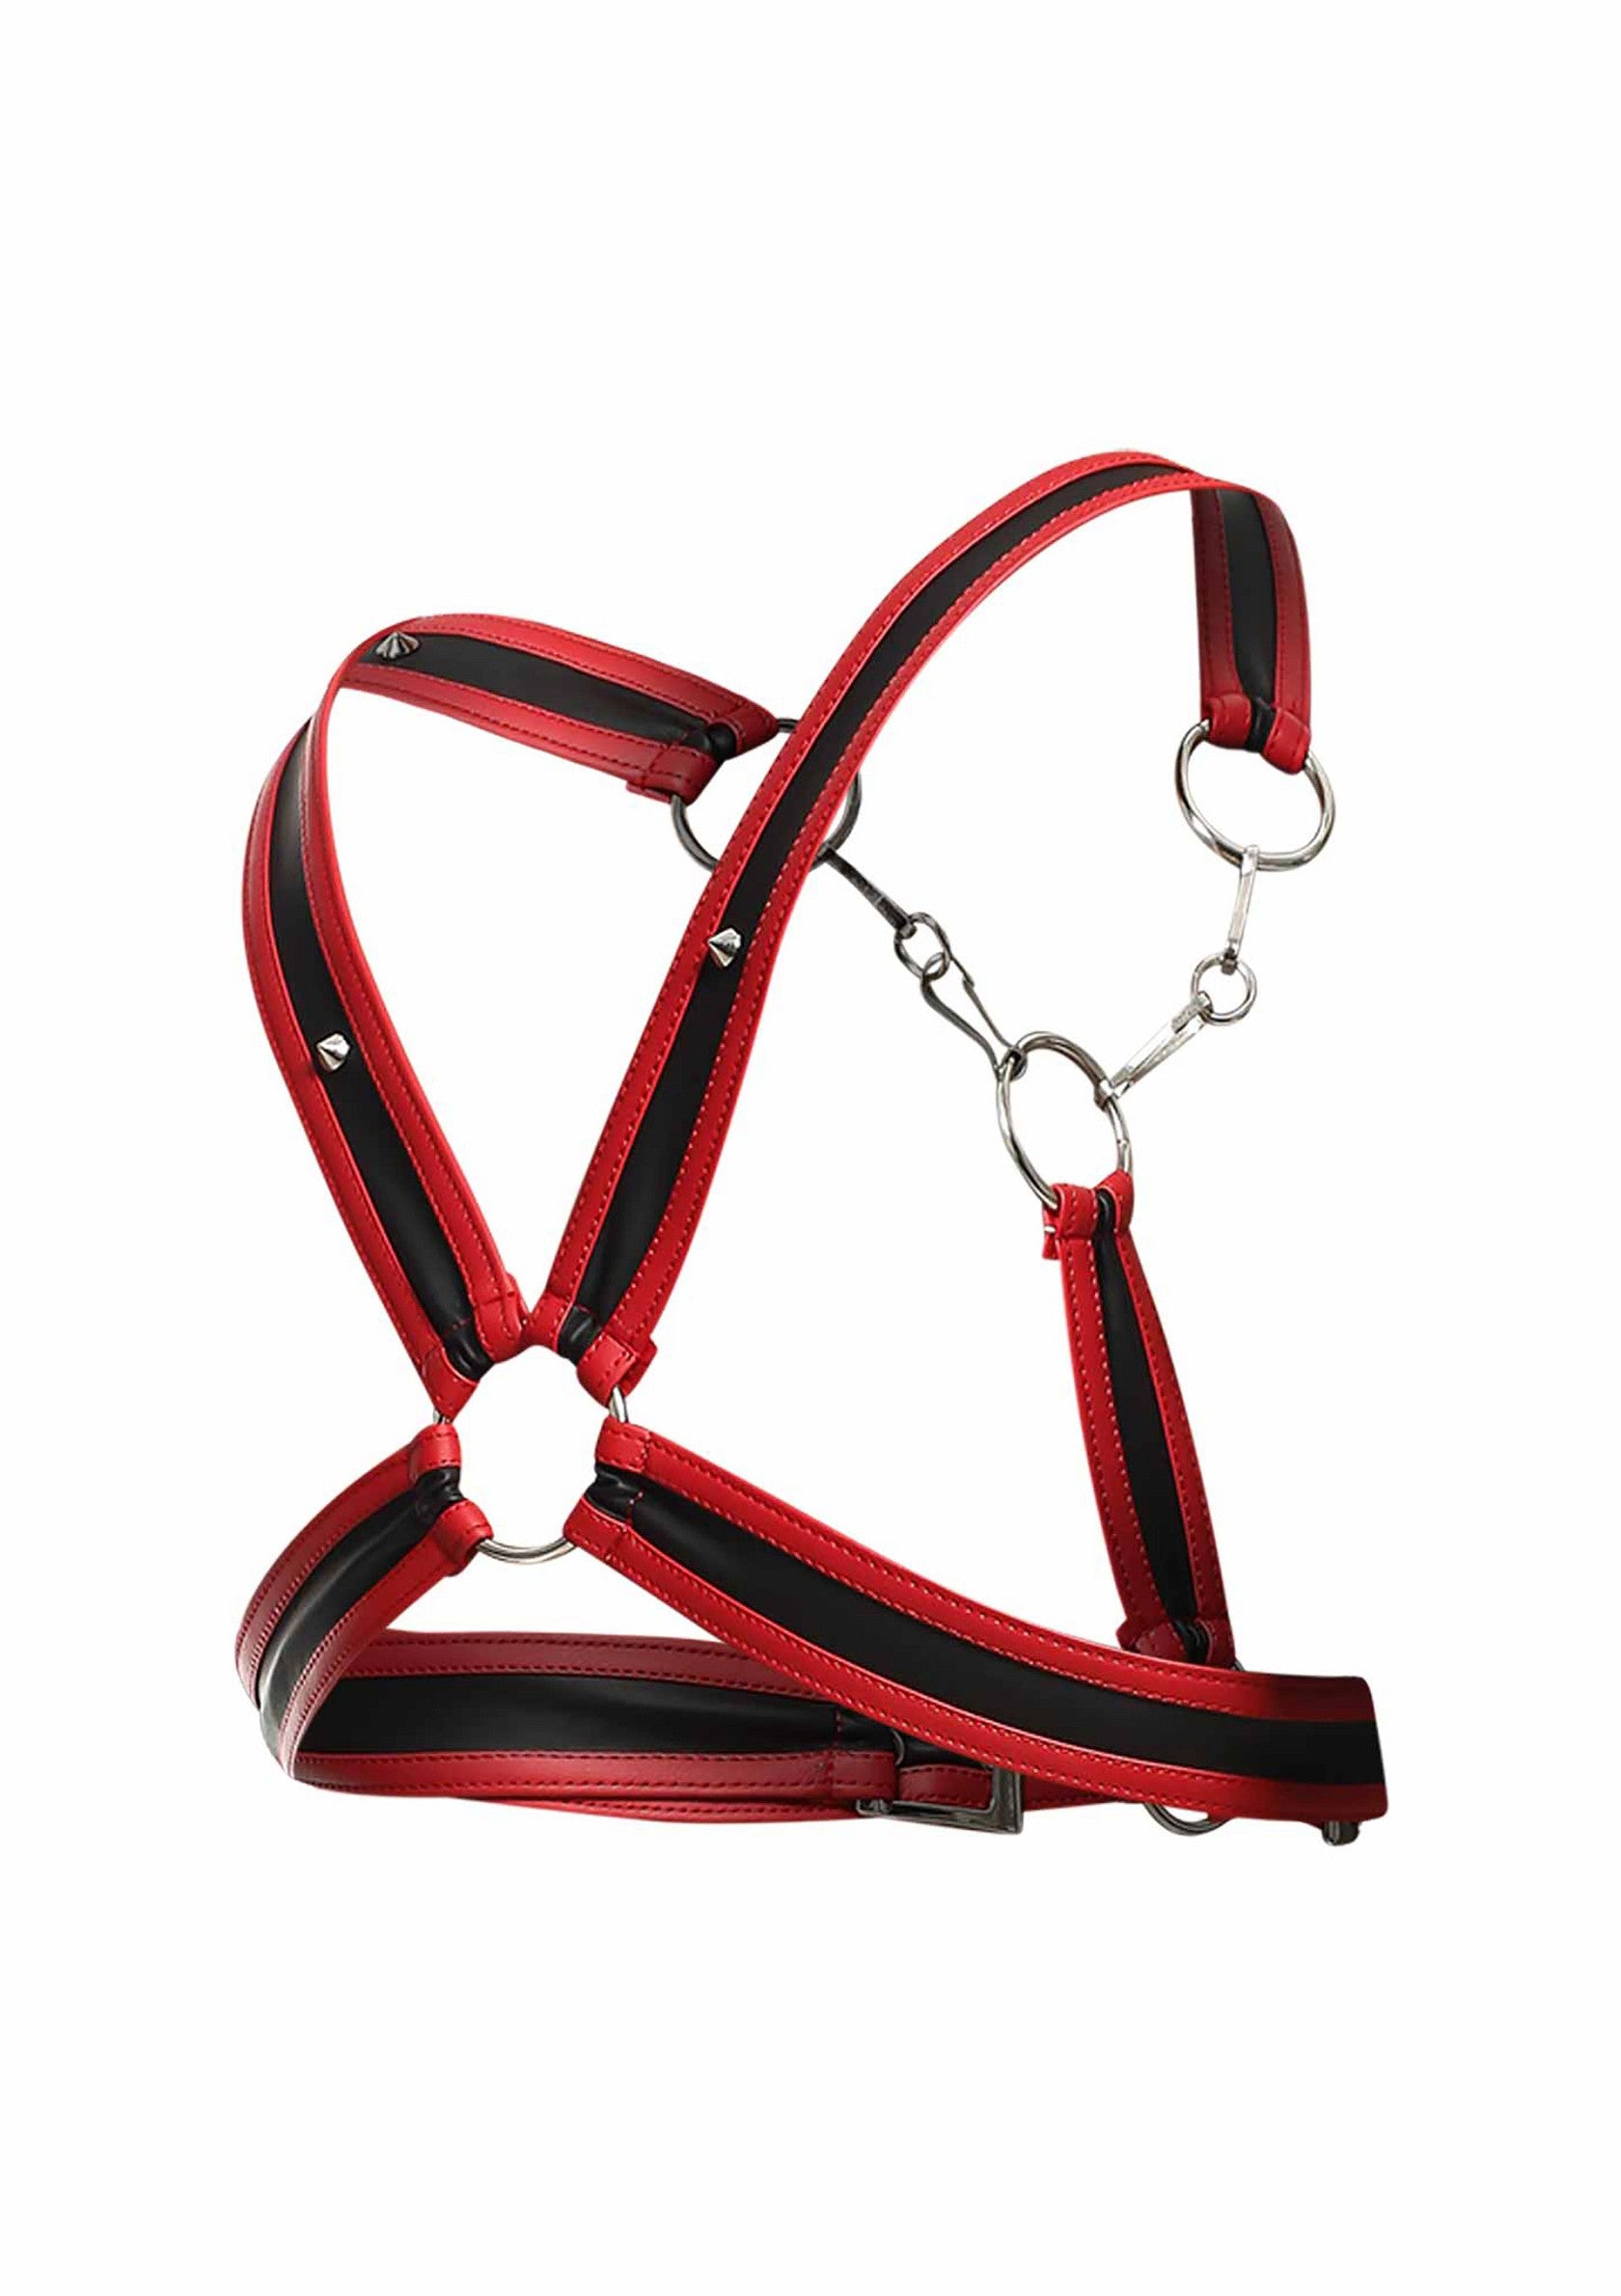 MOB Eroticwear Dngeon Cross Chain Harness RED O/S - 3